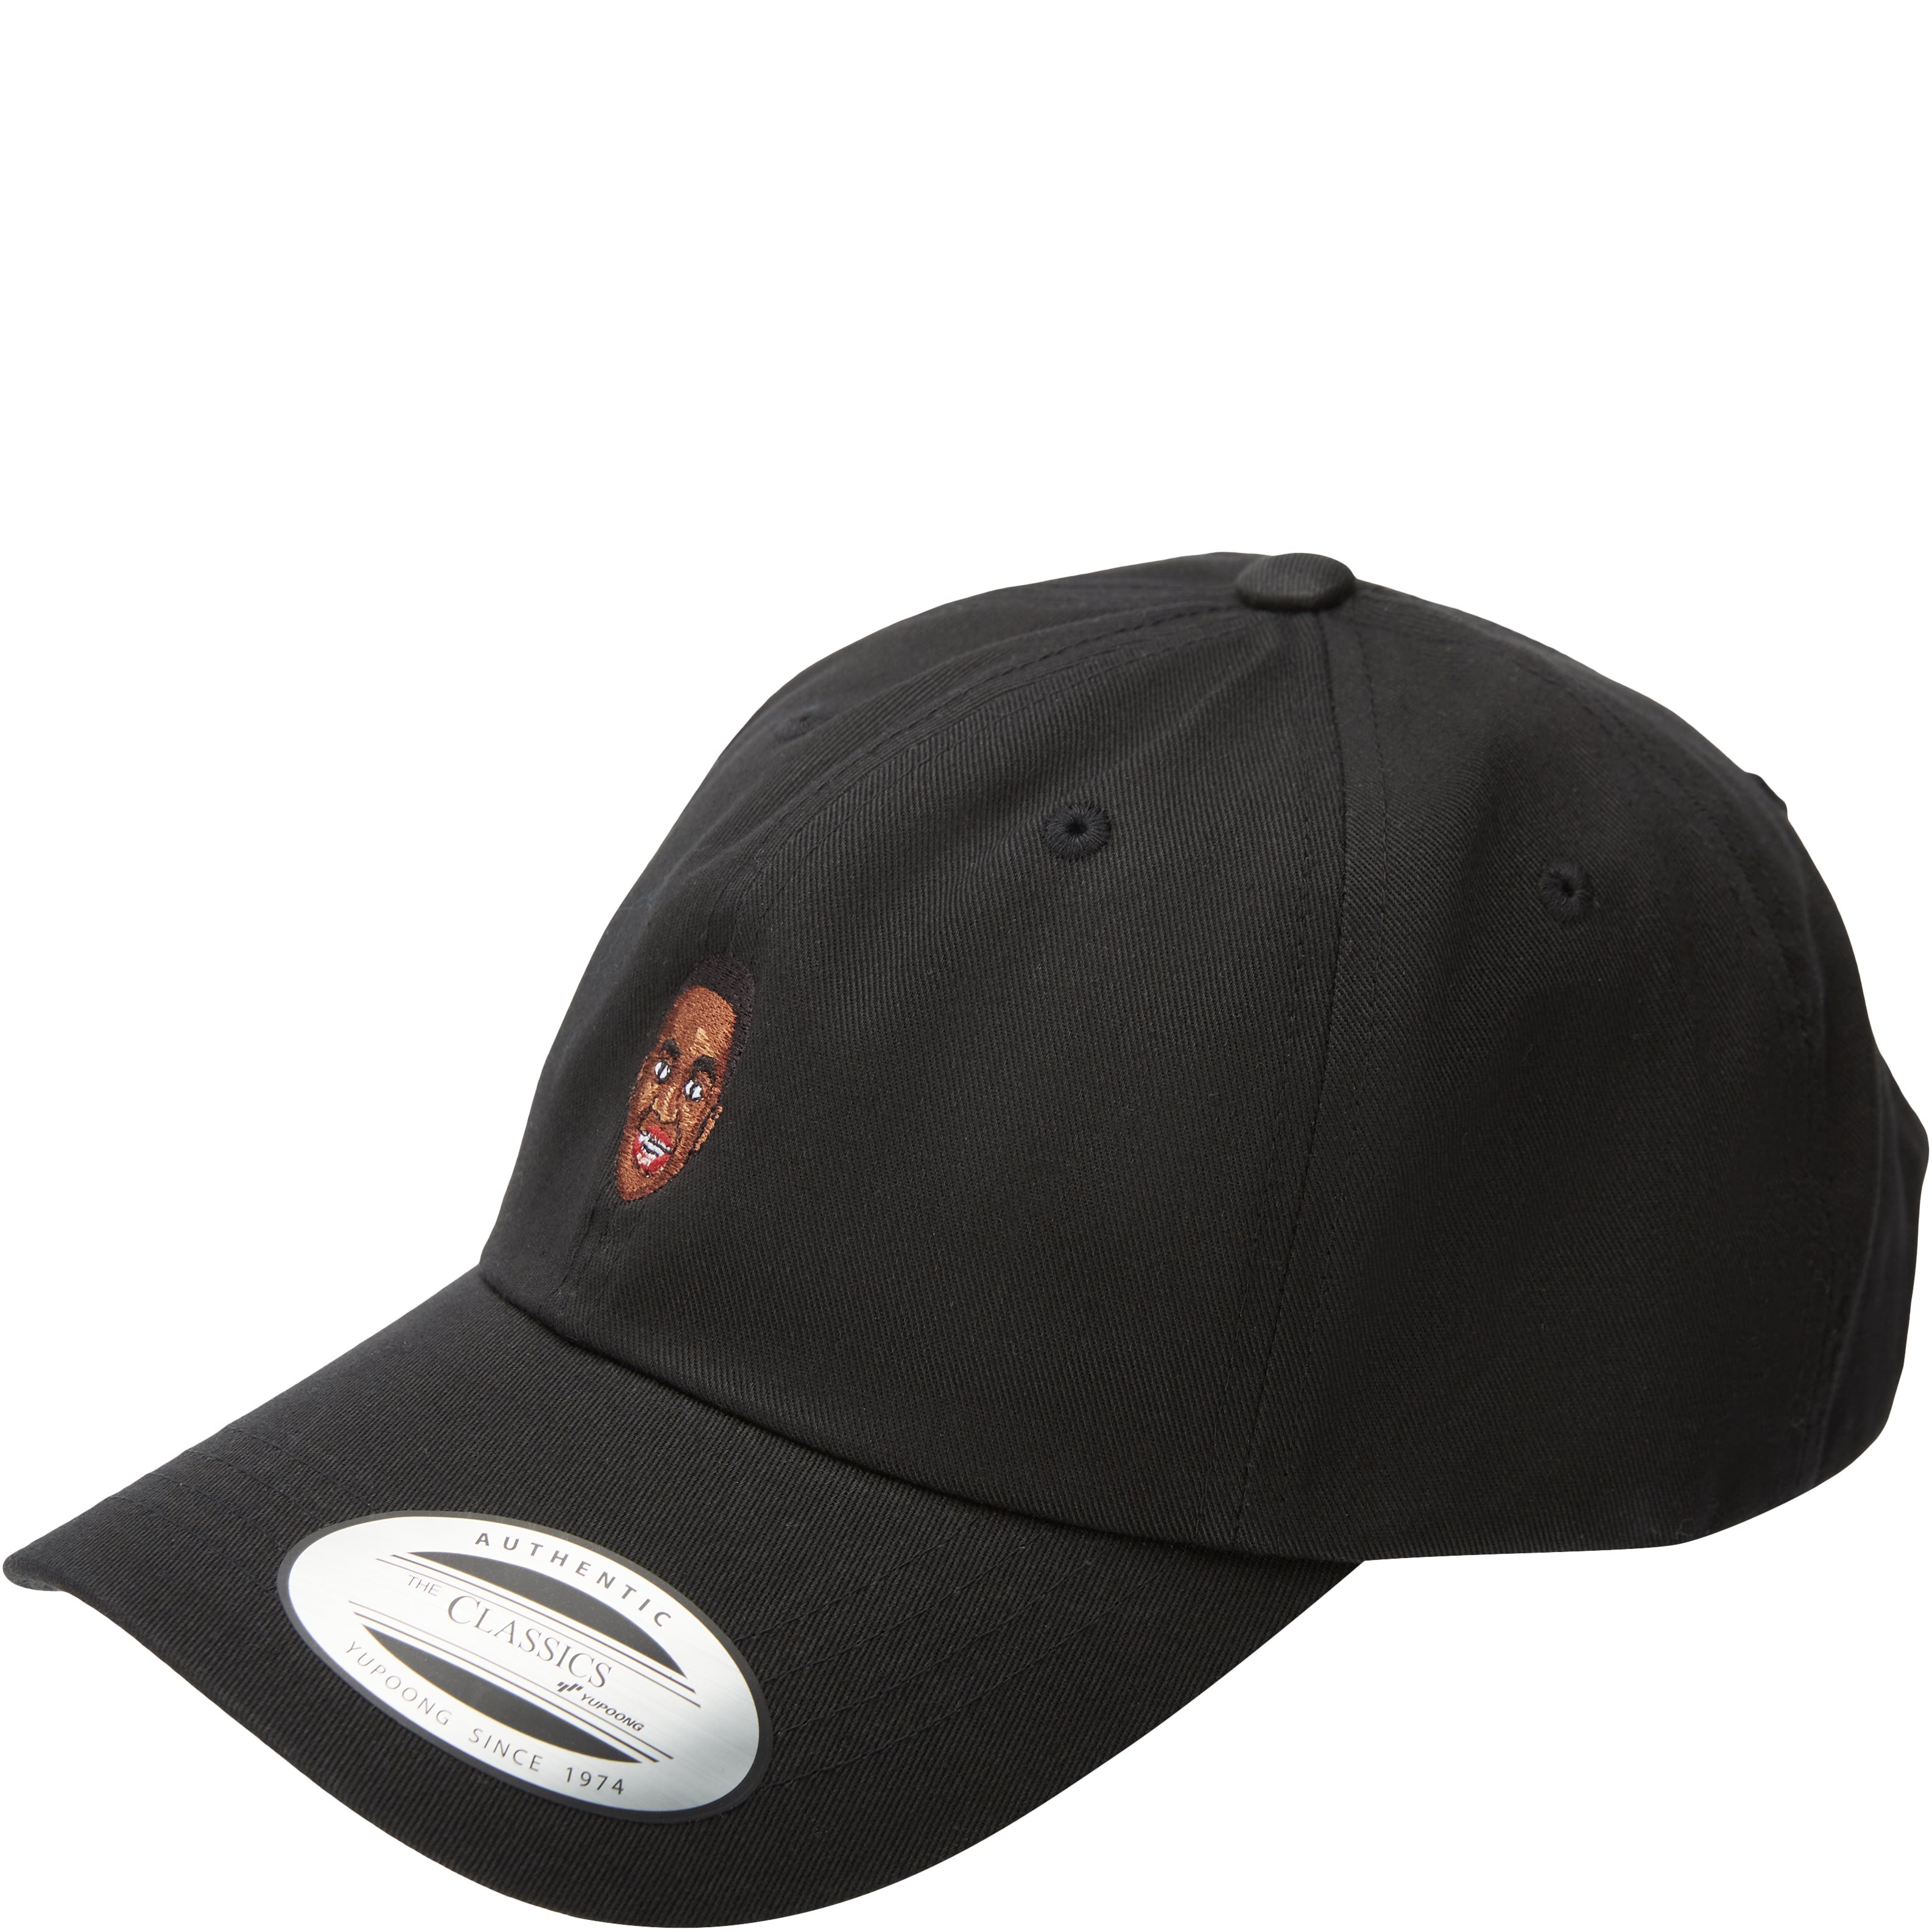 MOMBASA cap - Caps - Black